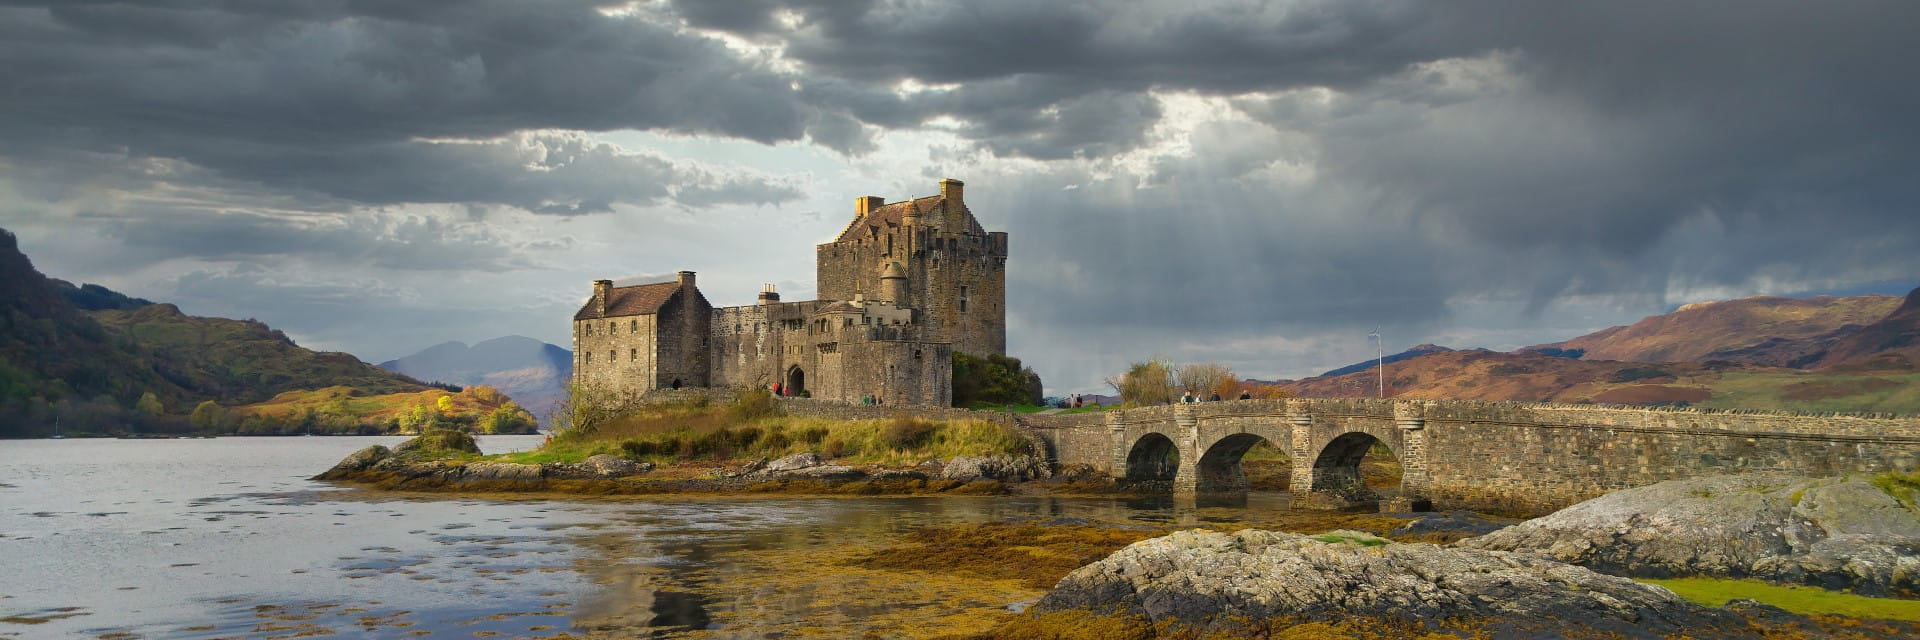 Eilean Donan Castle - Things to Do in Scotland